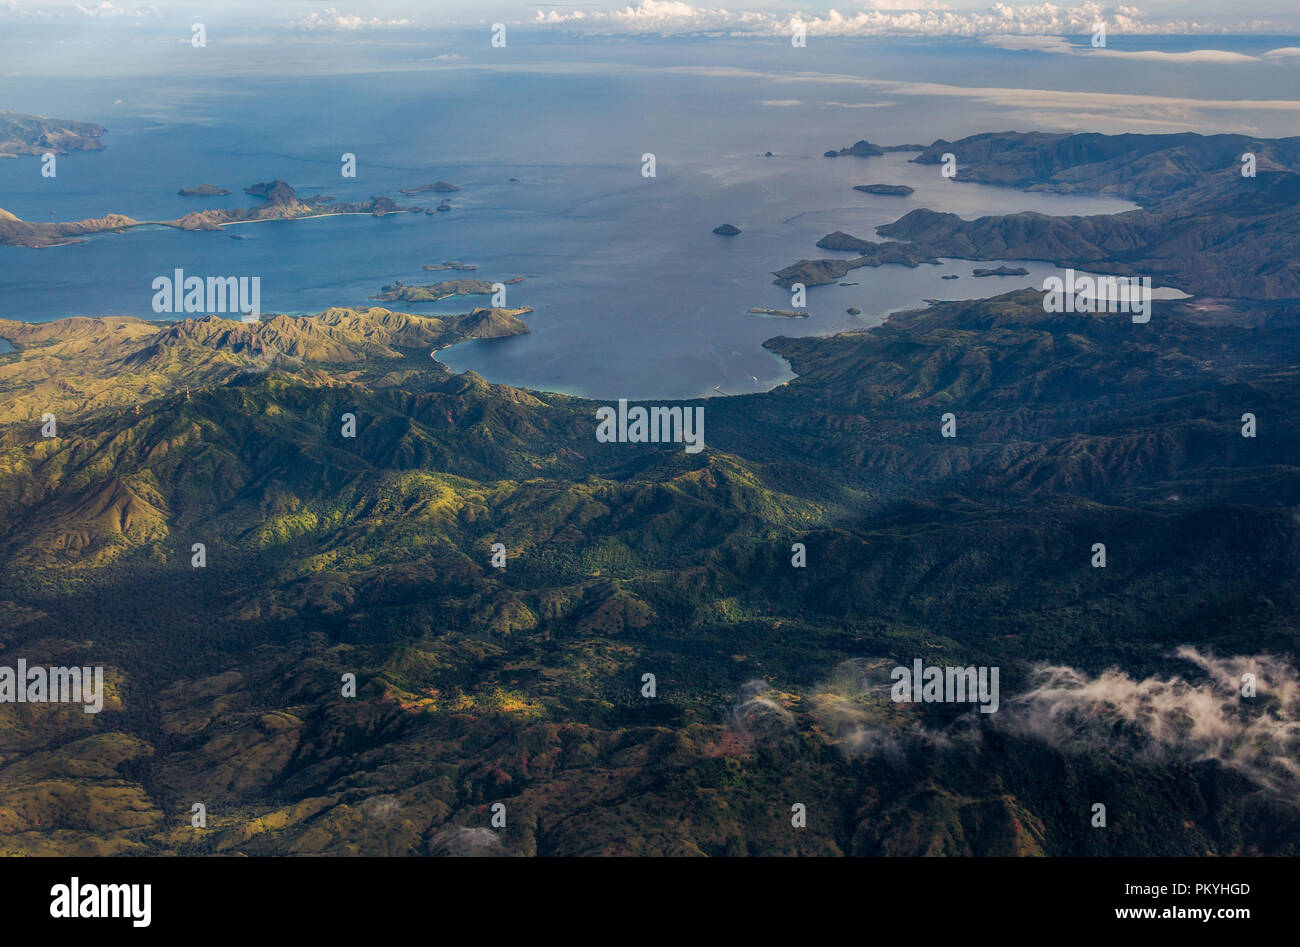 komodo island from above Stock Photo